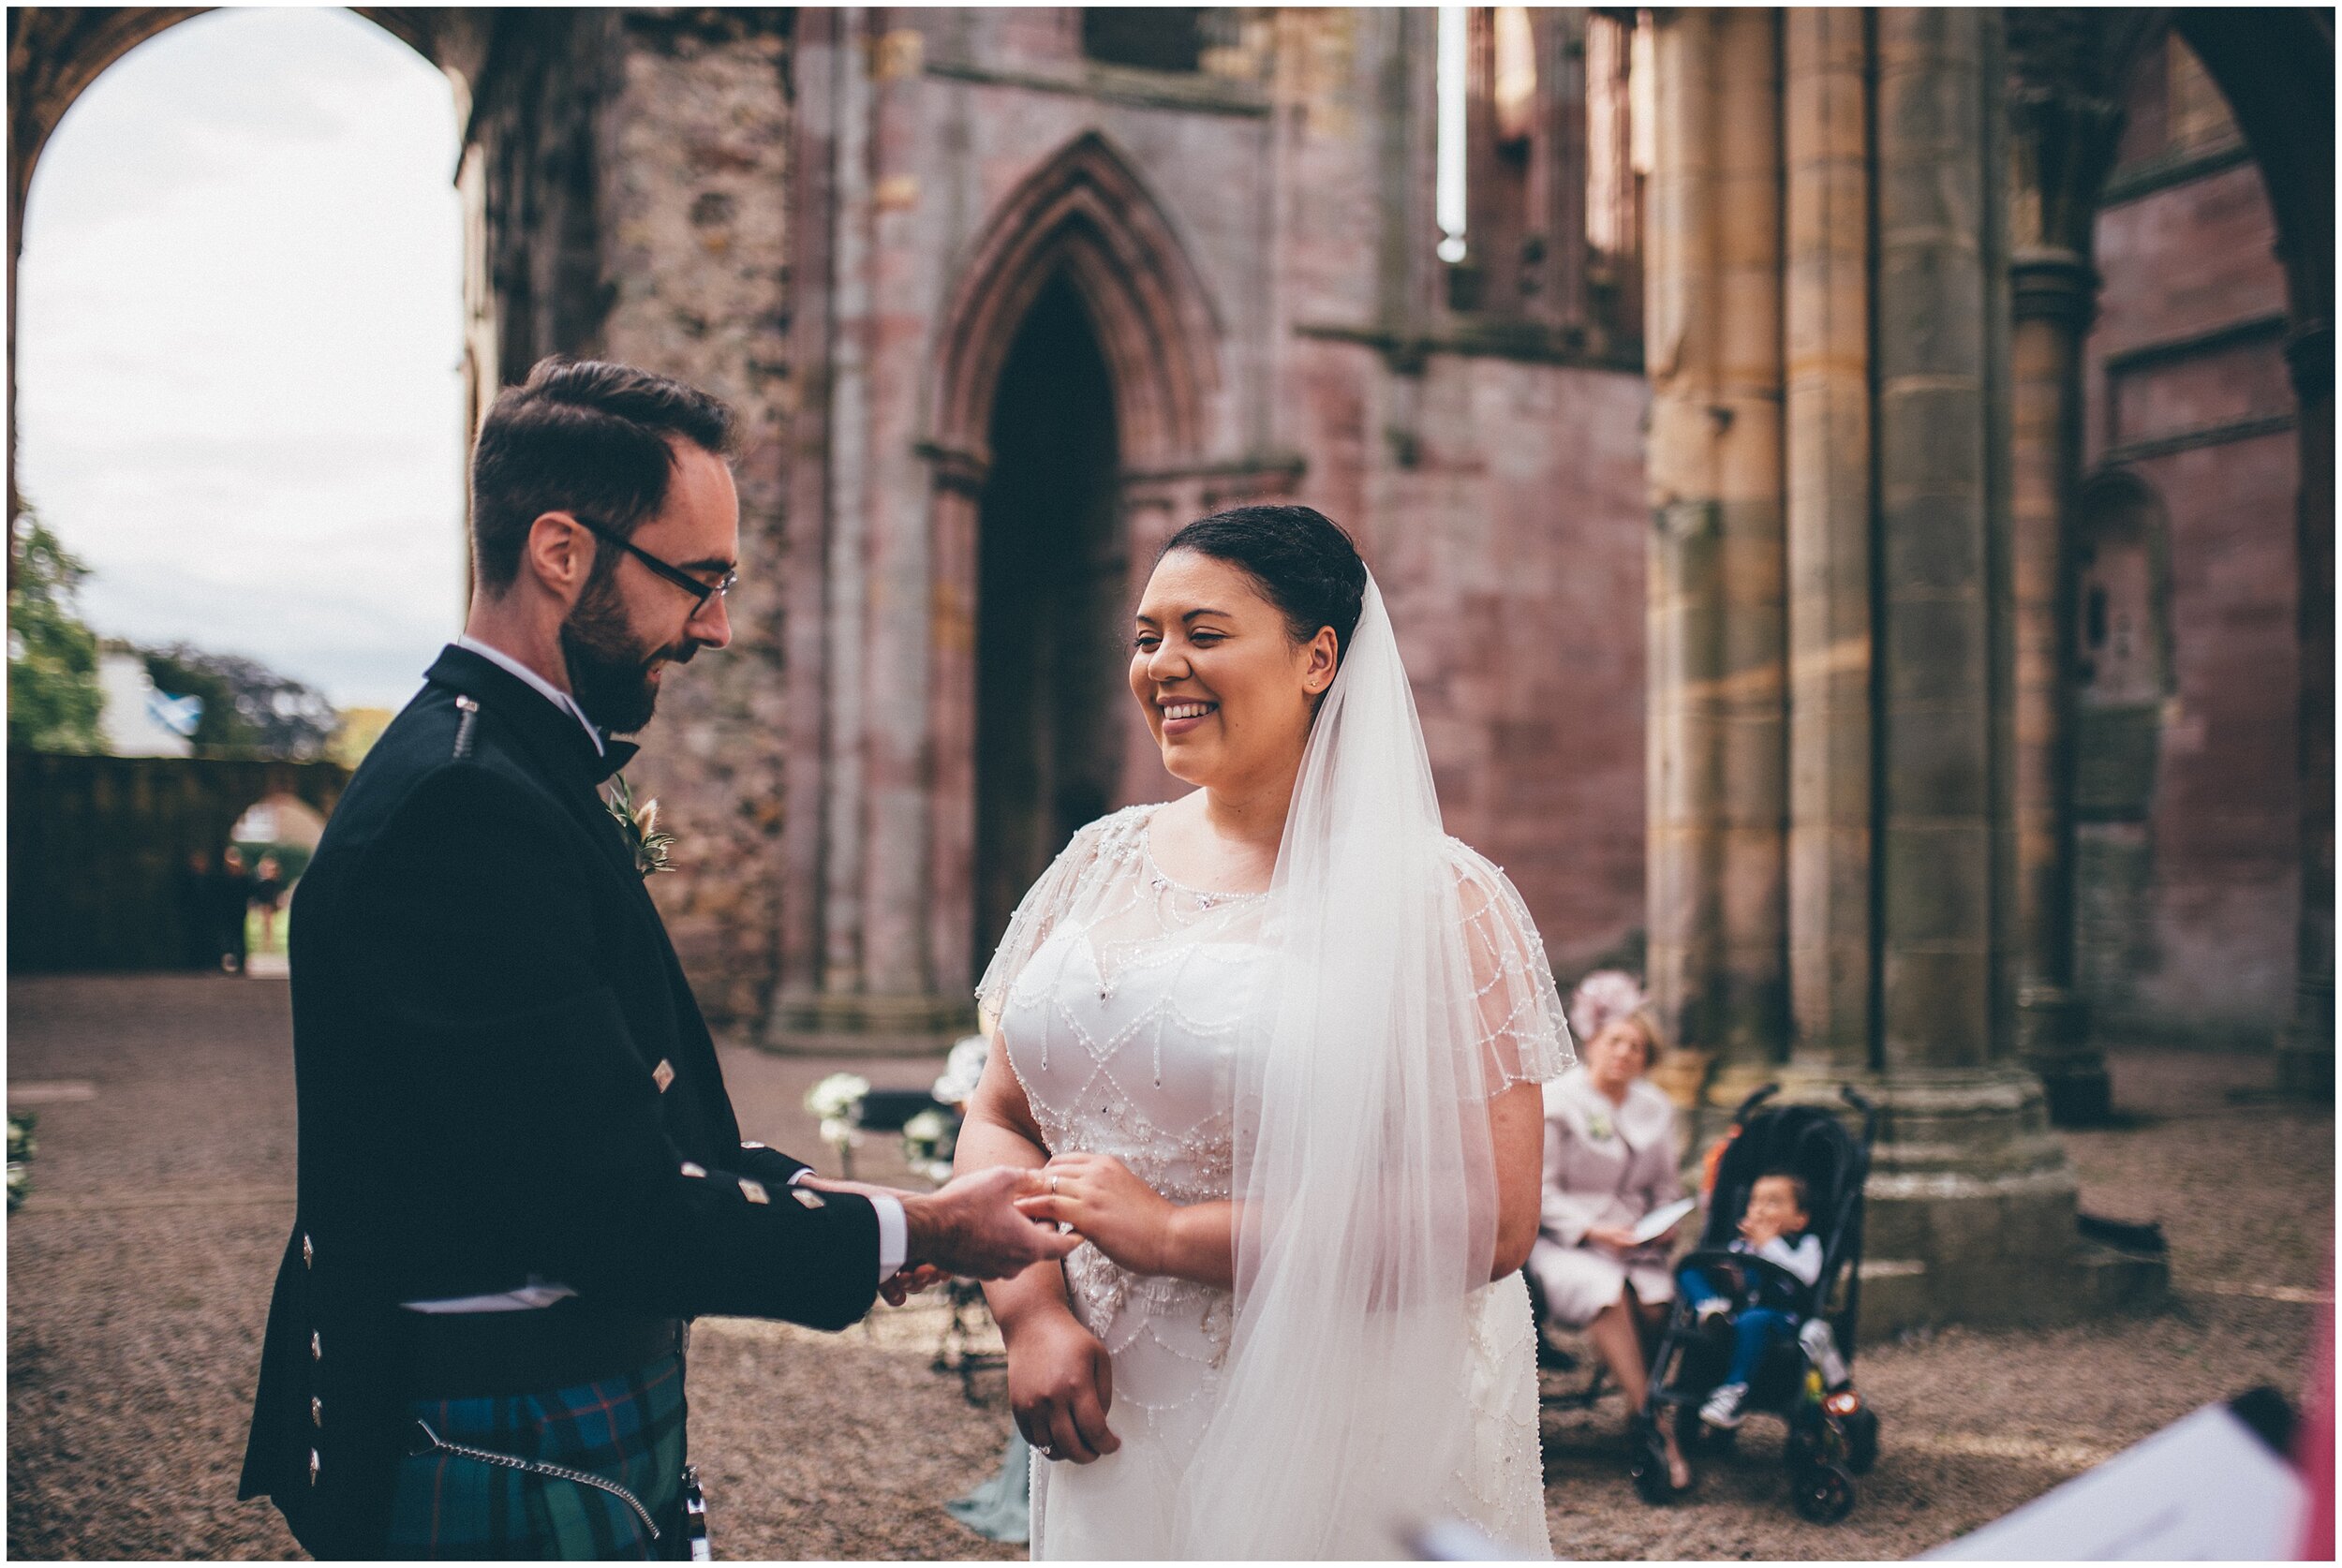 Wedding at Melrose Abbey on Scottish Borders.